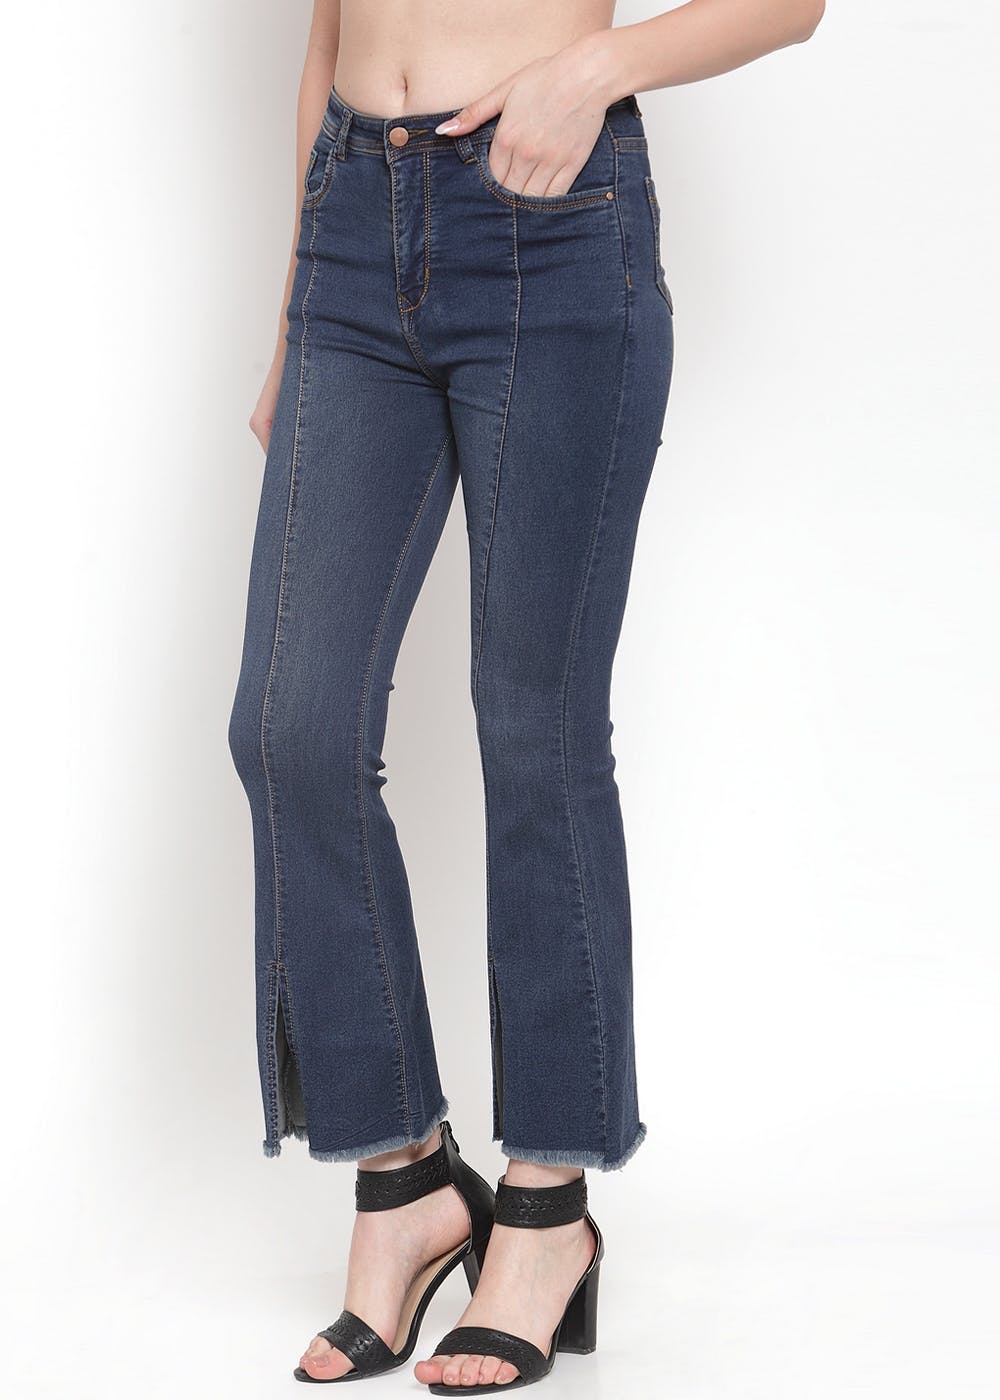 Get Front Slit Panel Stitch Detail Wide Legged Dark Denim Jeans At 1709 Lbb Shop